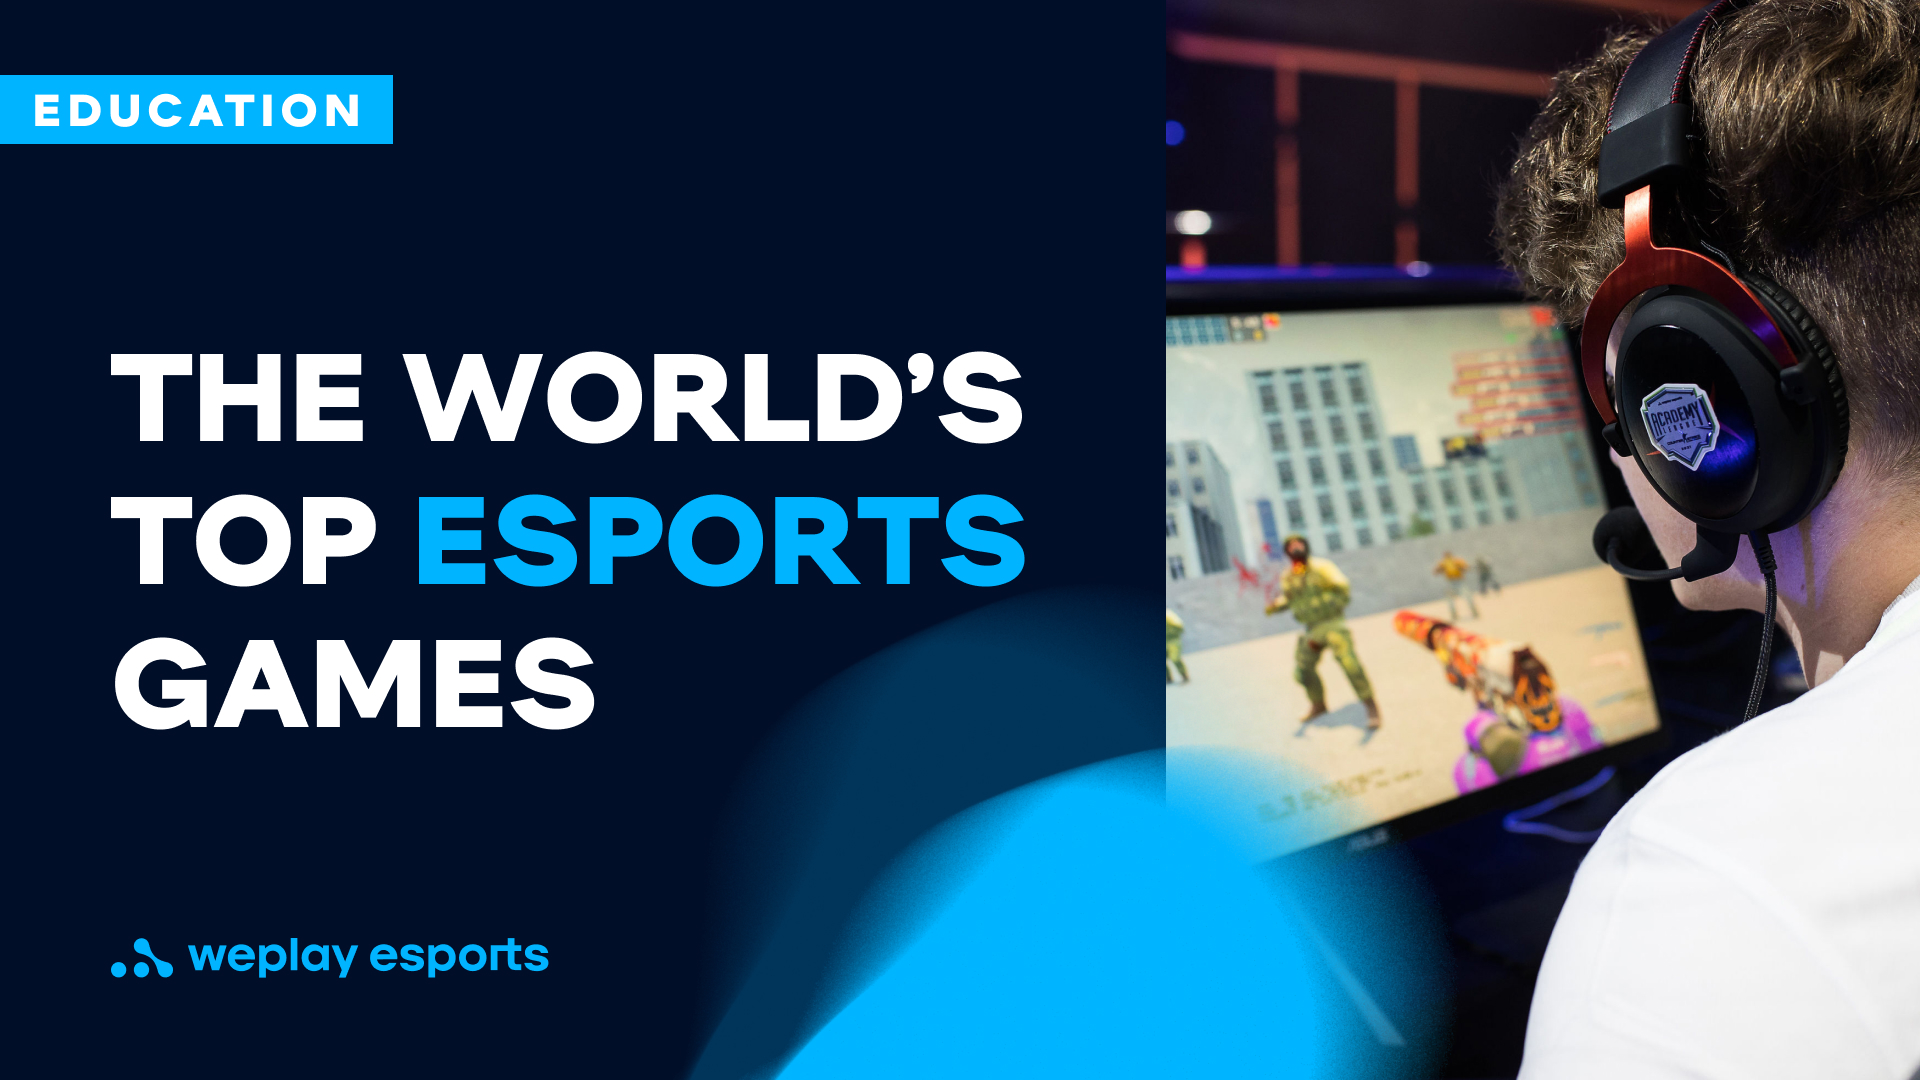 MTG 2021 World Championship XXVII: Formats, players, and schedule - Dot  Esports